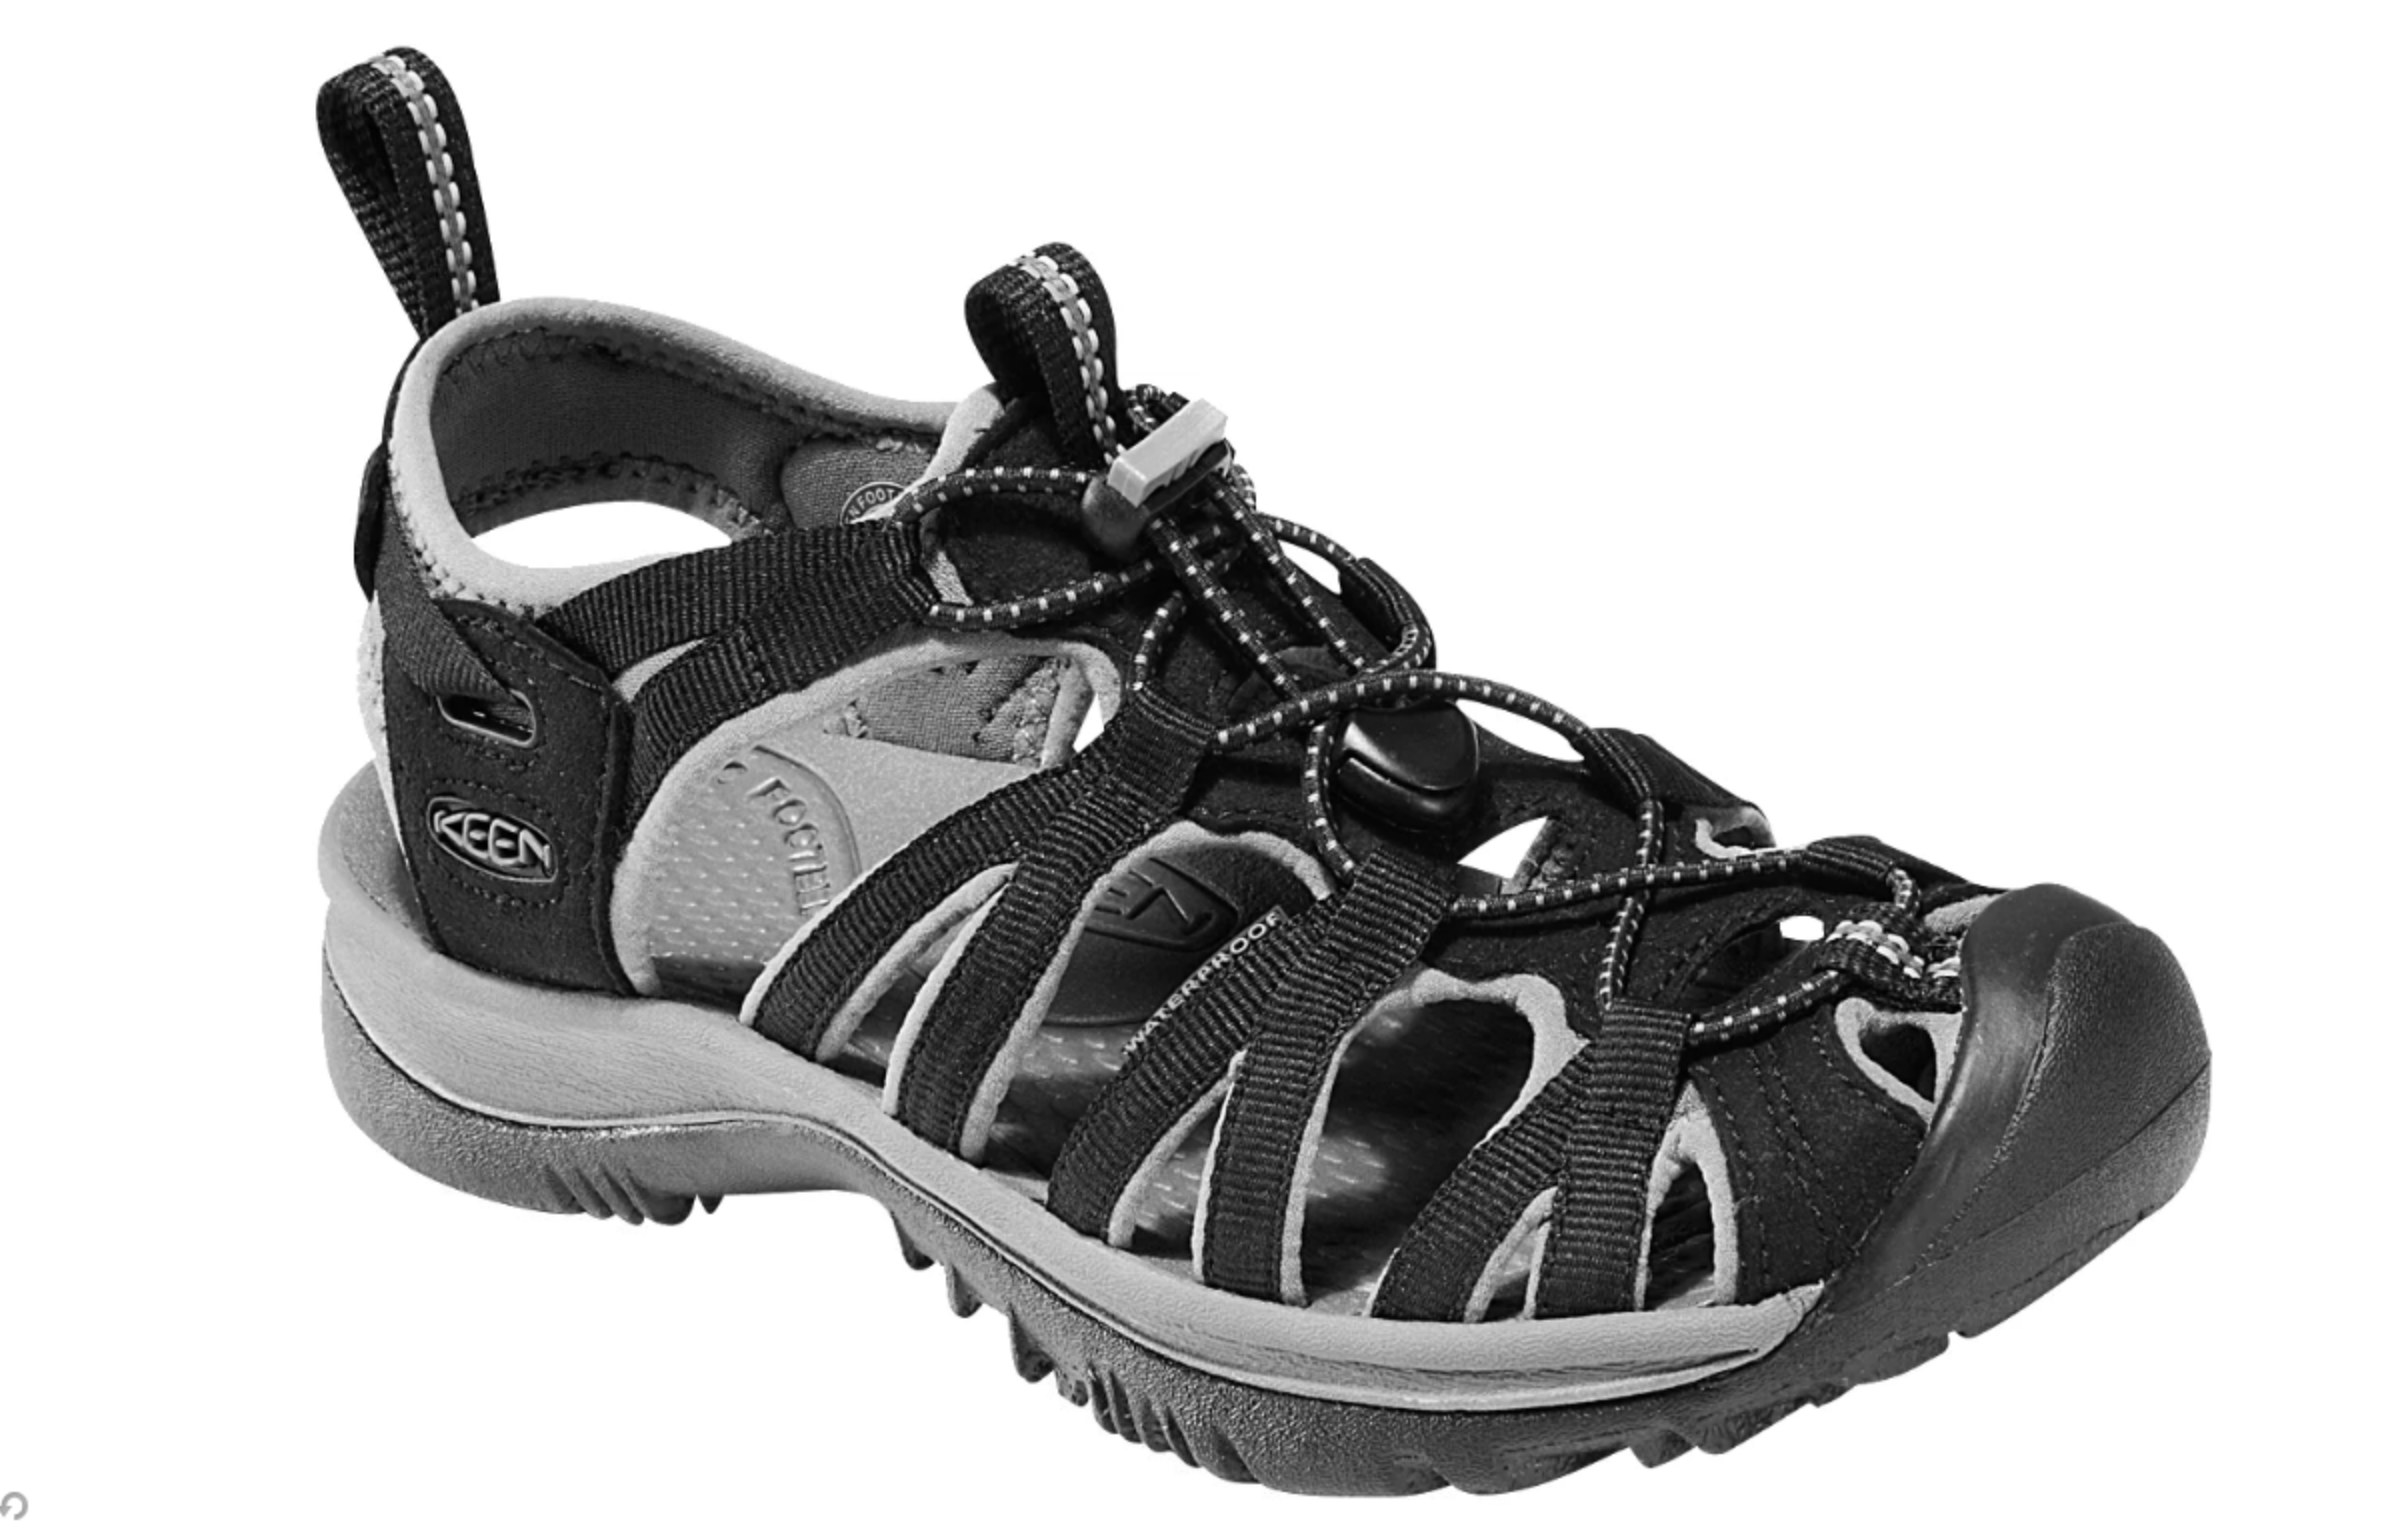 the Keen&#x27;s whisper sandals in black